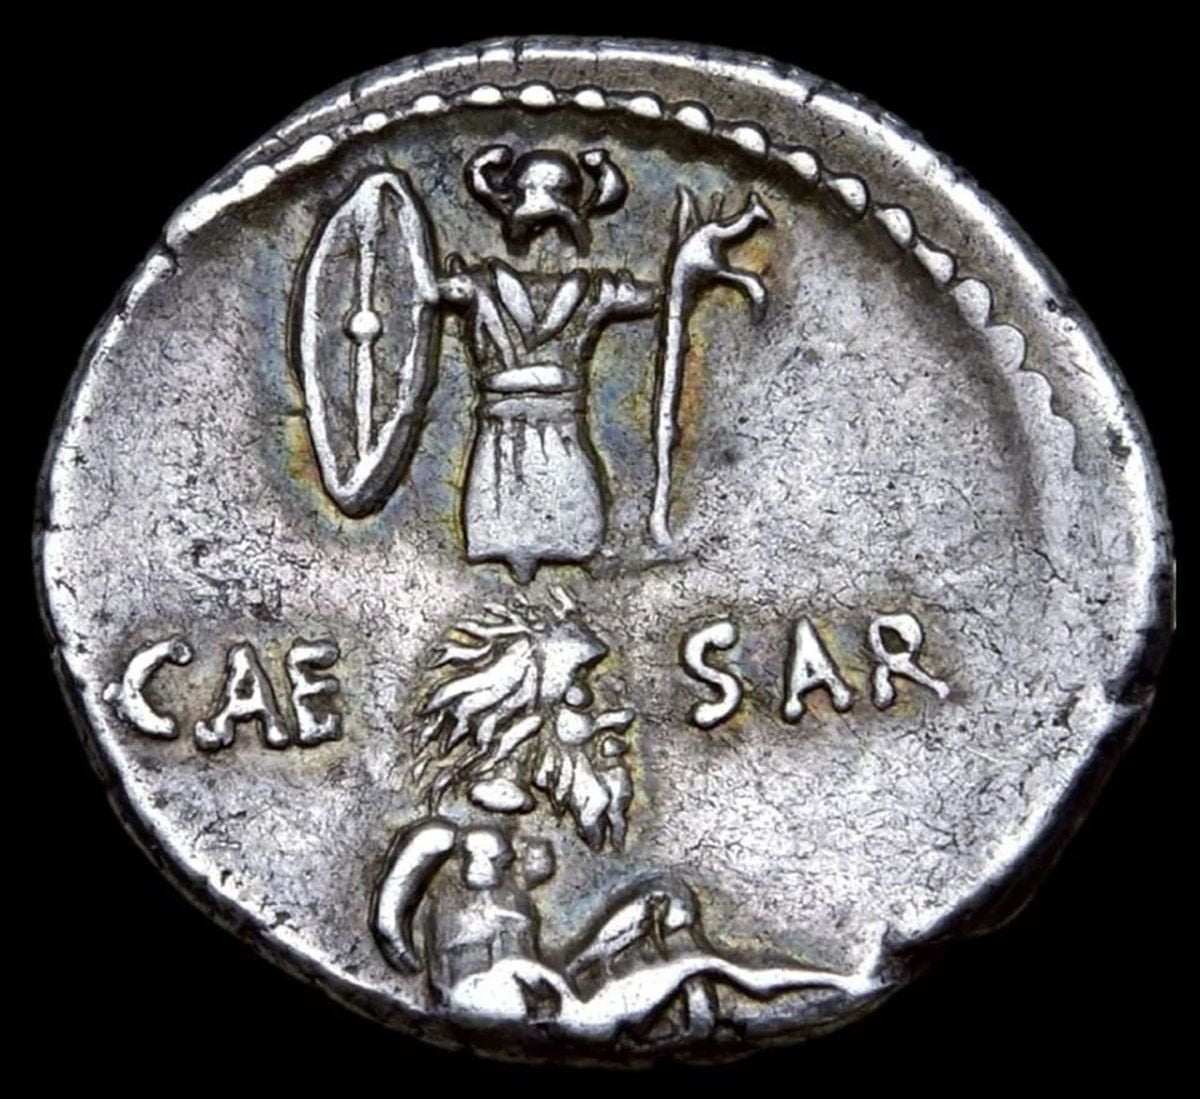 Roman coin commemorating Caesar's triumph